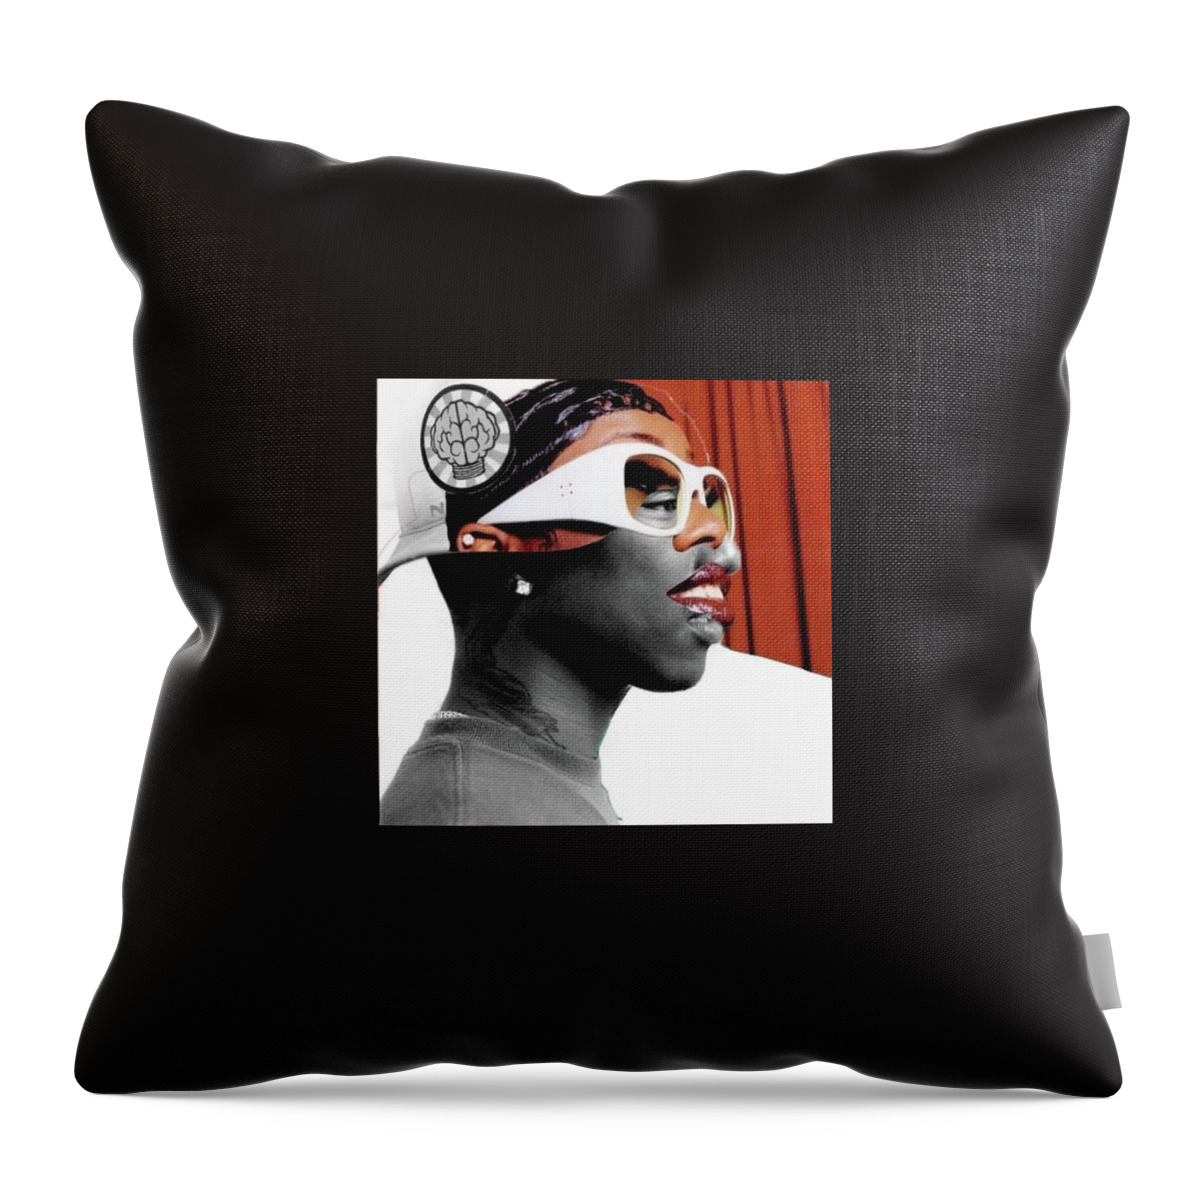 Hiphop Throw Pillow featuring the digital art VA Finest by Corey Wynn